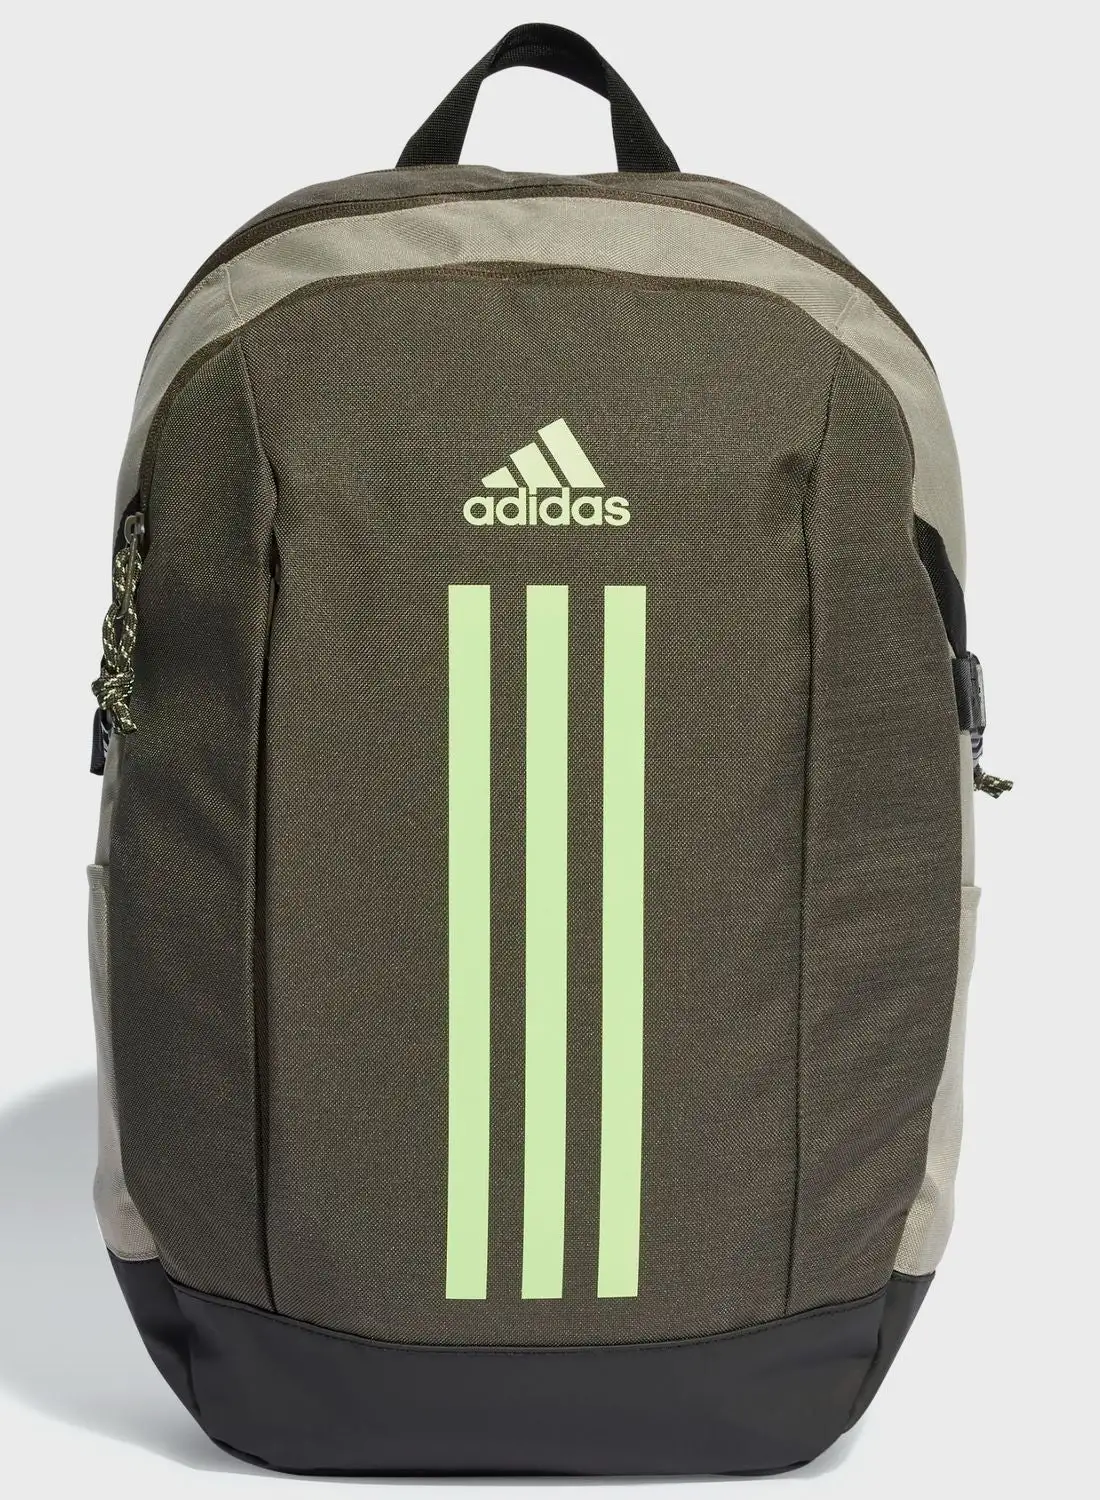 Adidas Power Vii Backpack